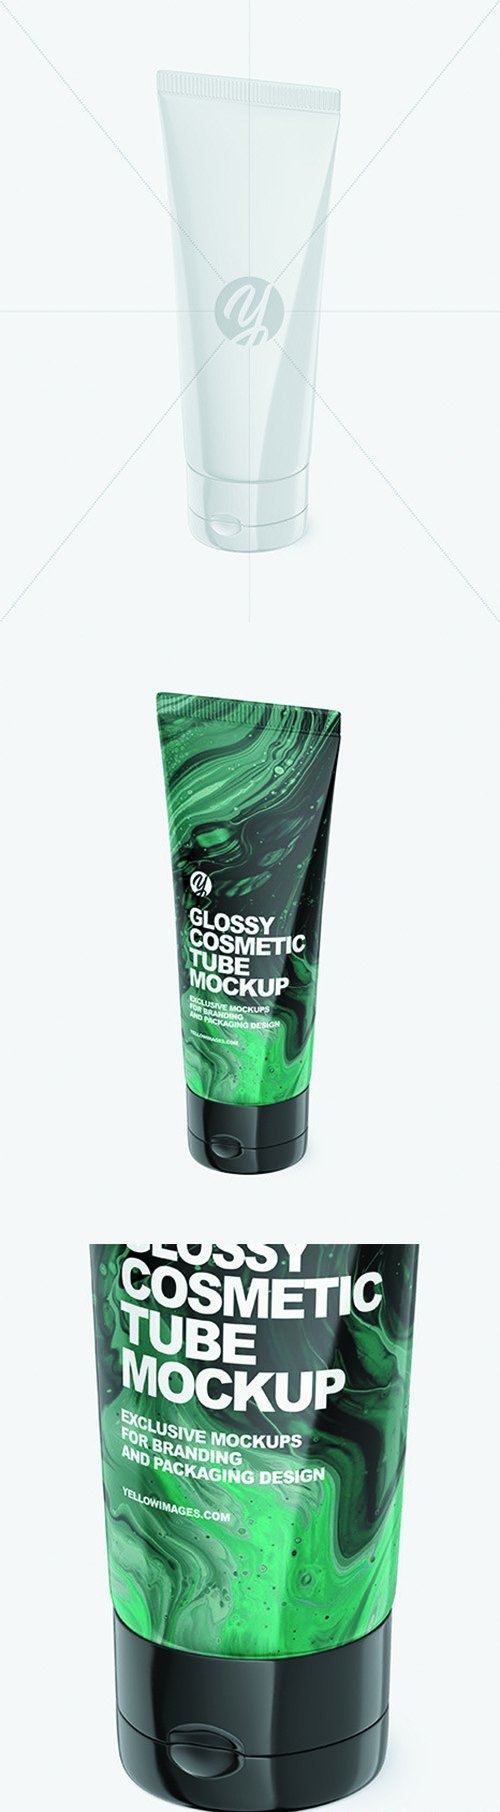 Glossy Cosmetic Tube Mockup 66369